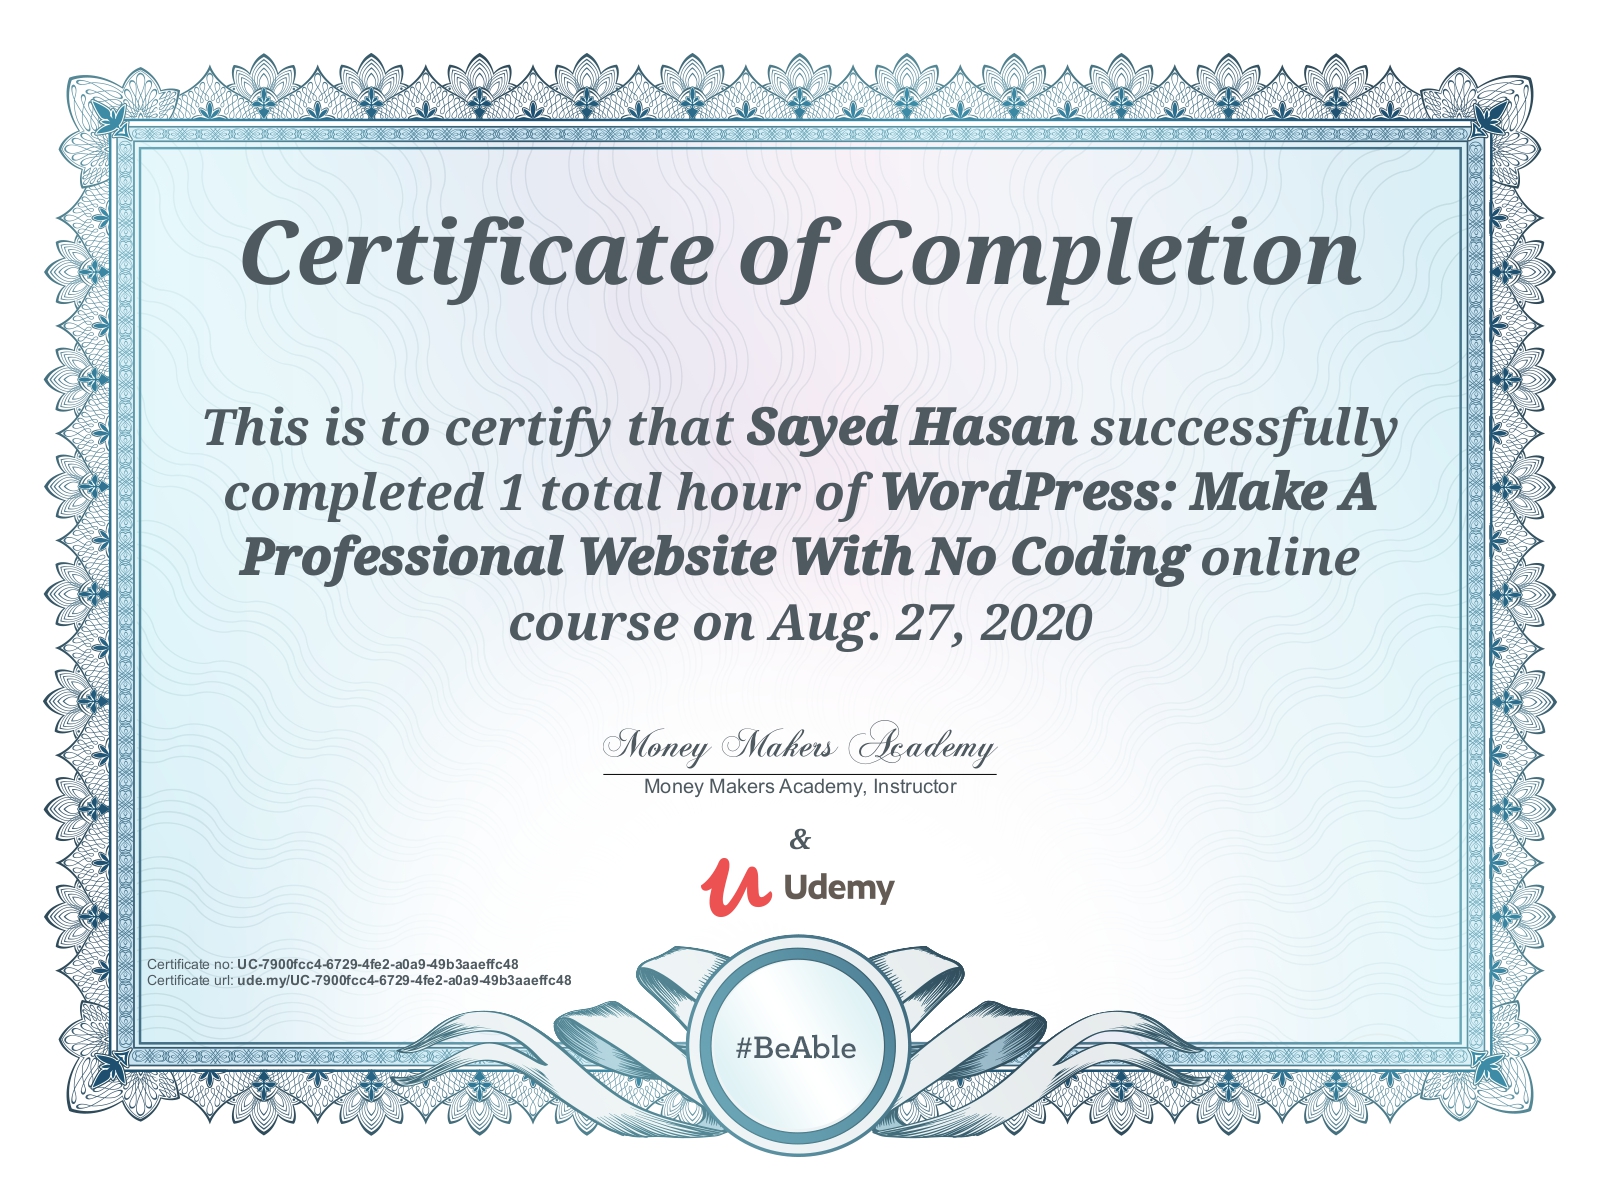 Sayed's certificate of wordpress design